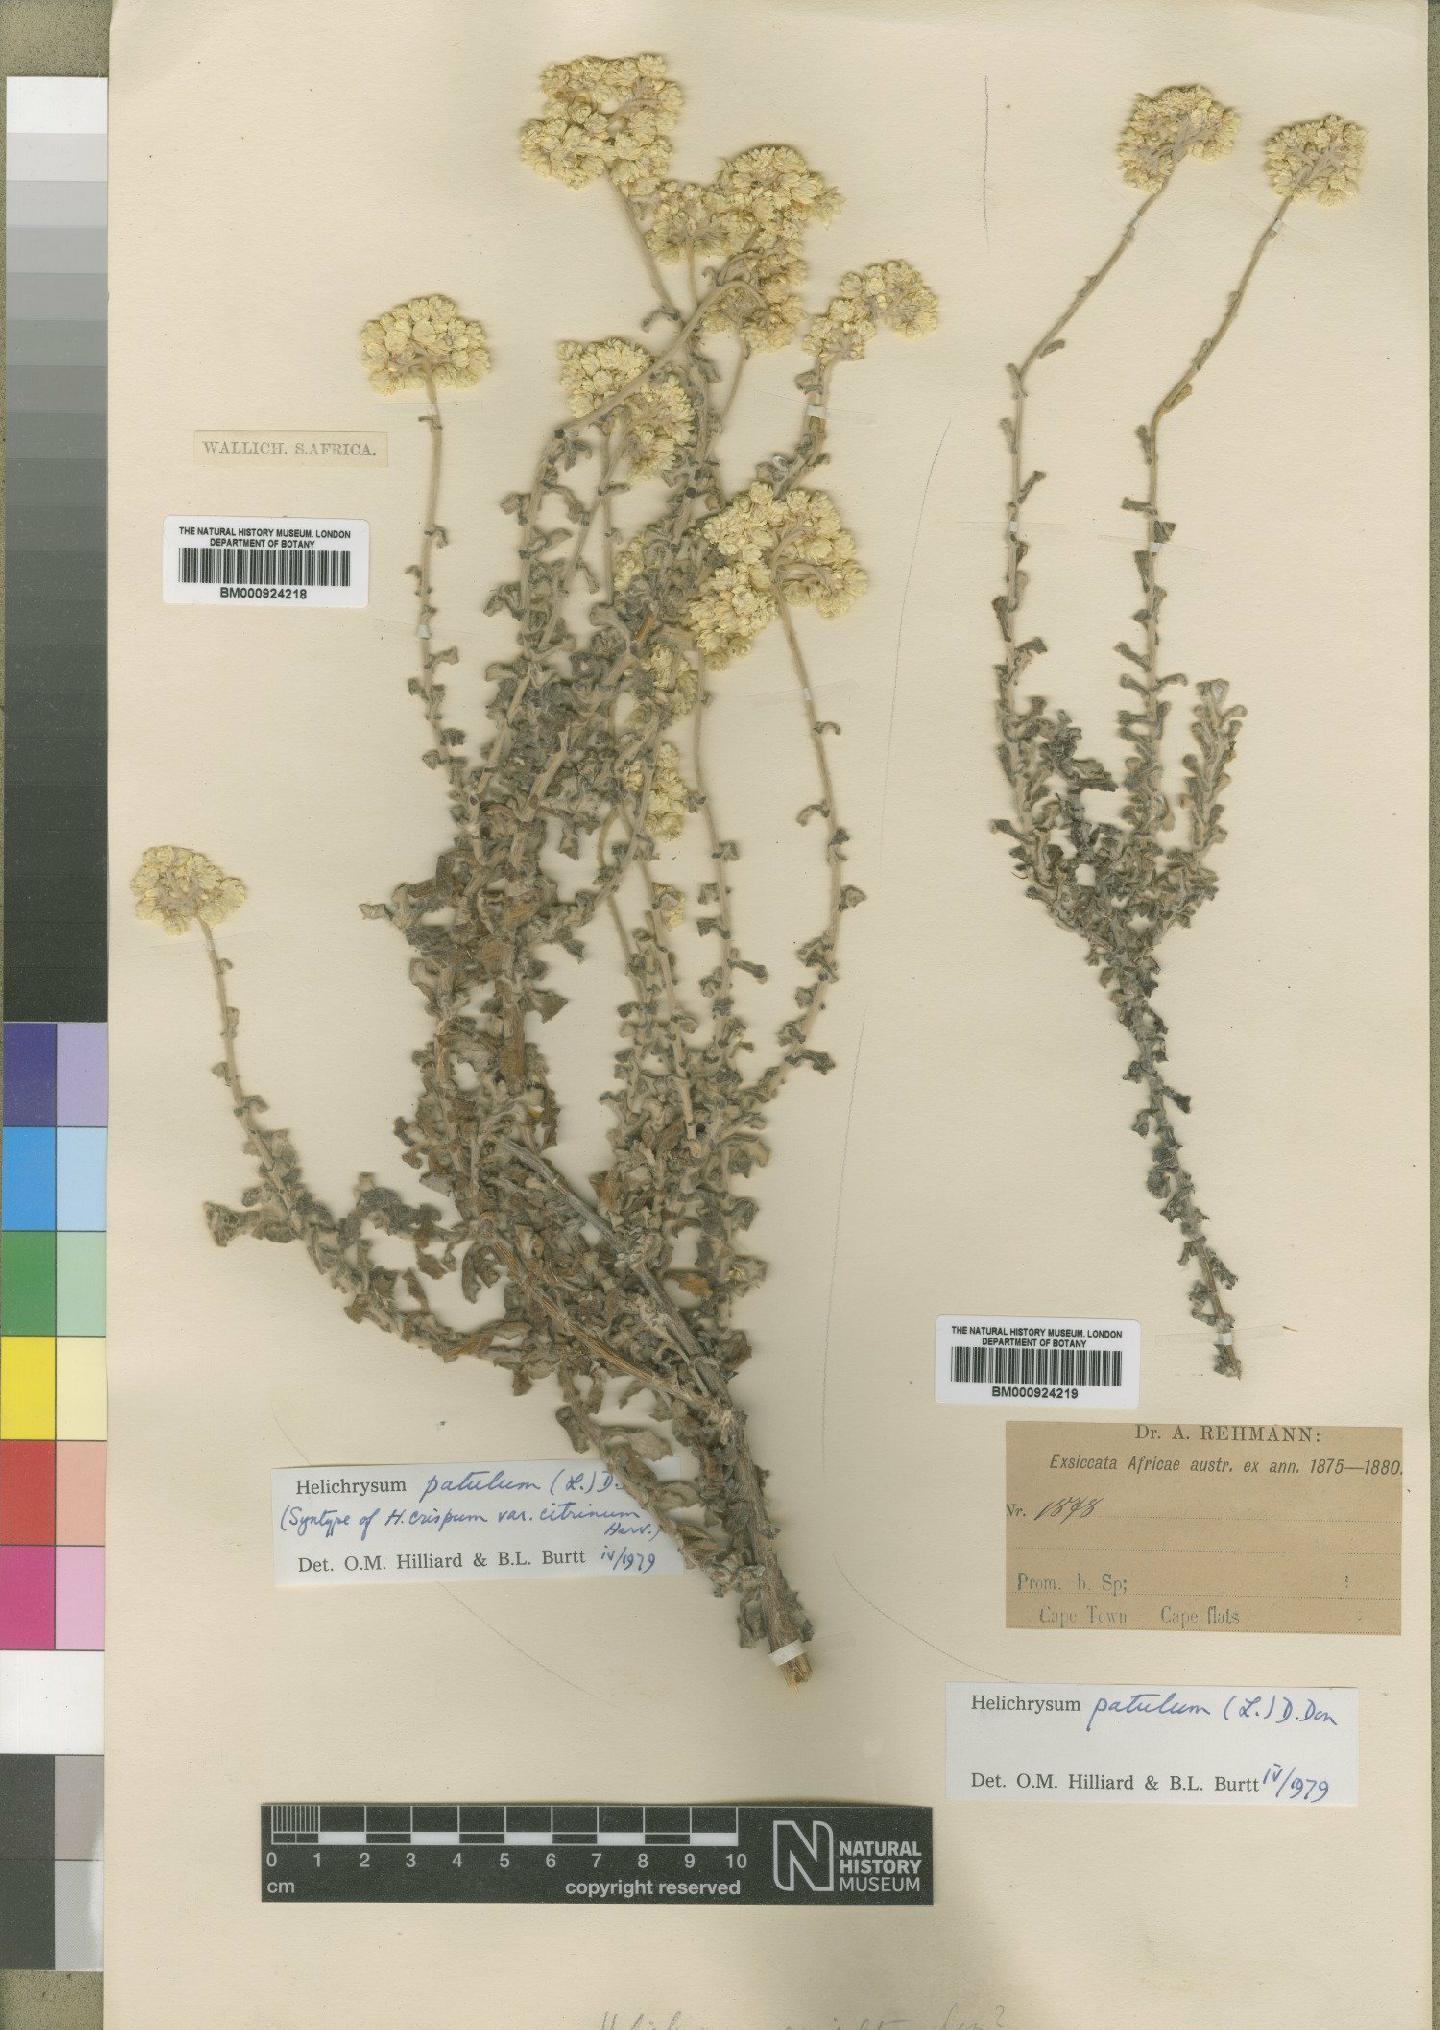 To NHMUK collection (Helichrysum patulum (L.) D.Don; NHMUK:ecatalogue:4529247)